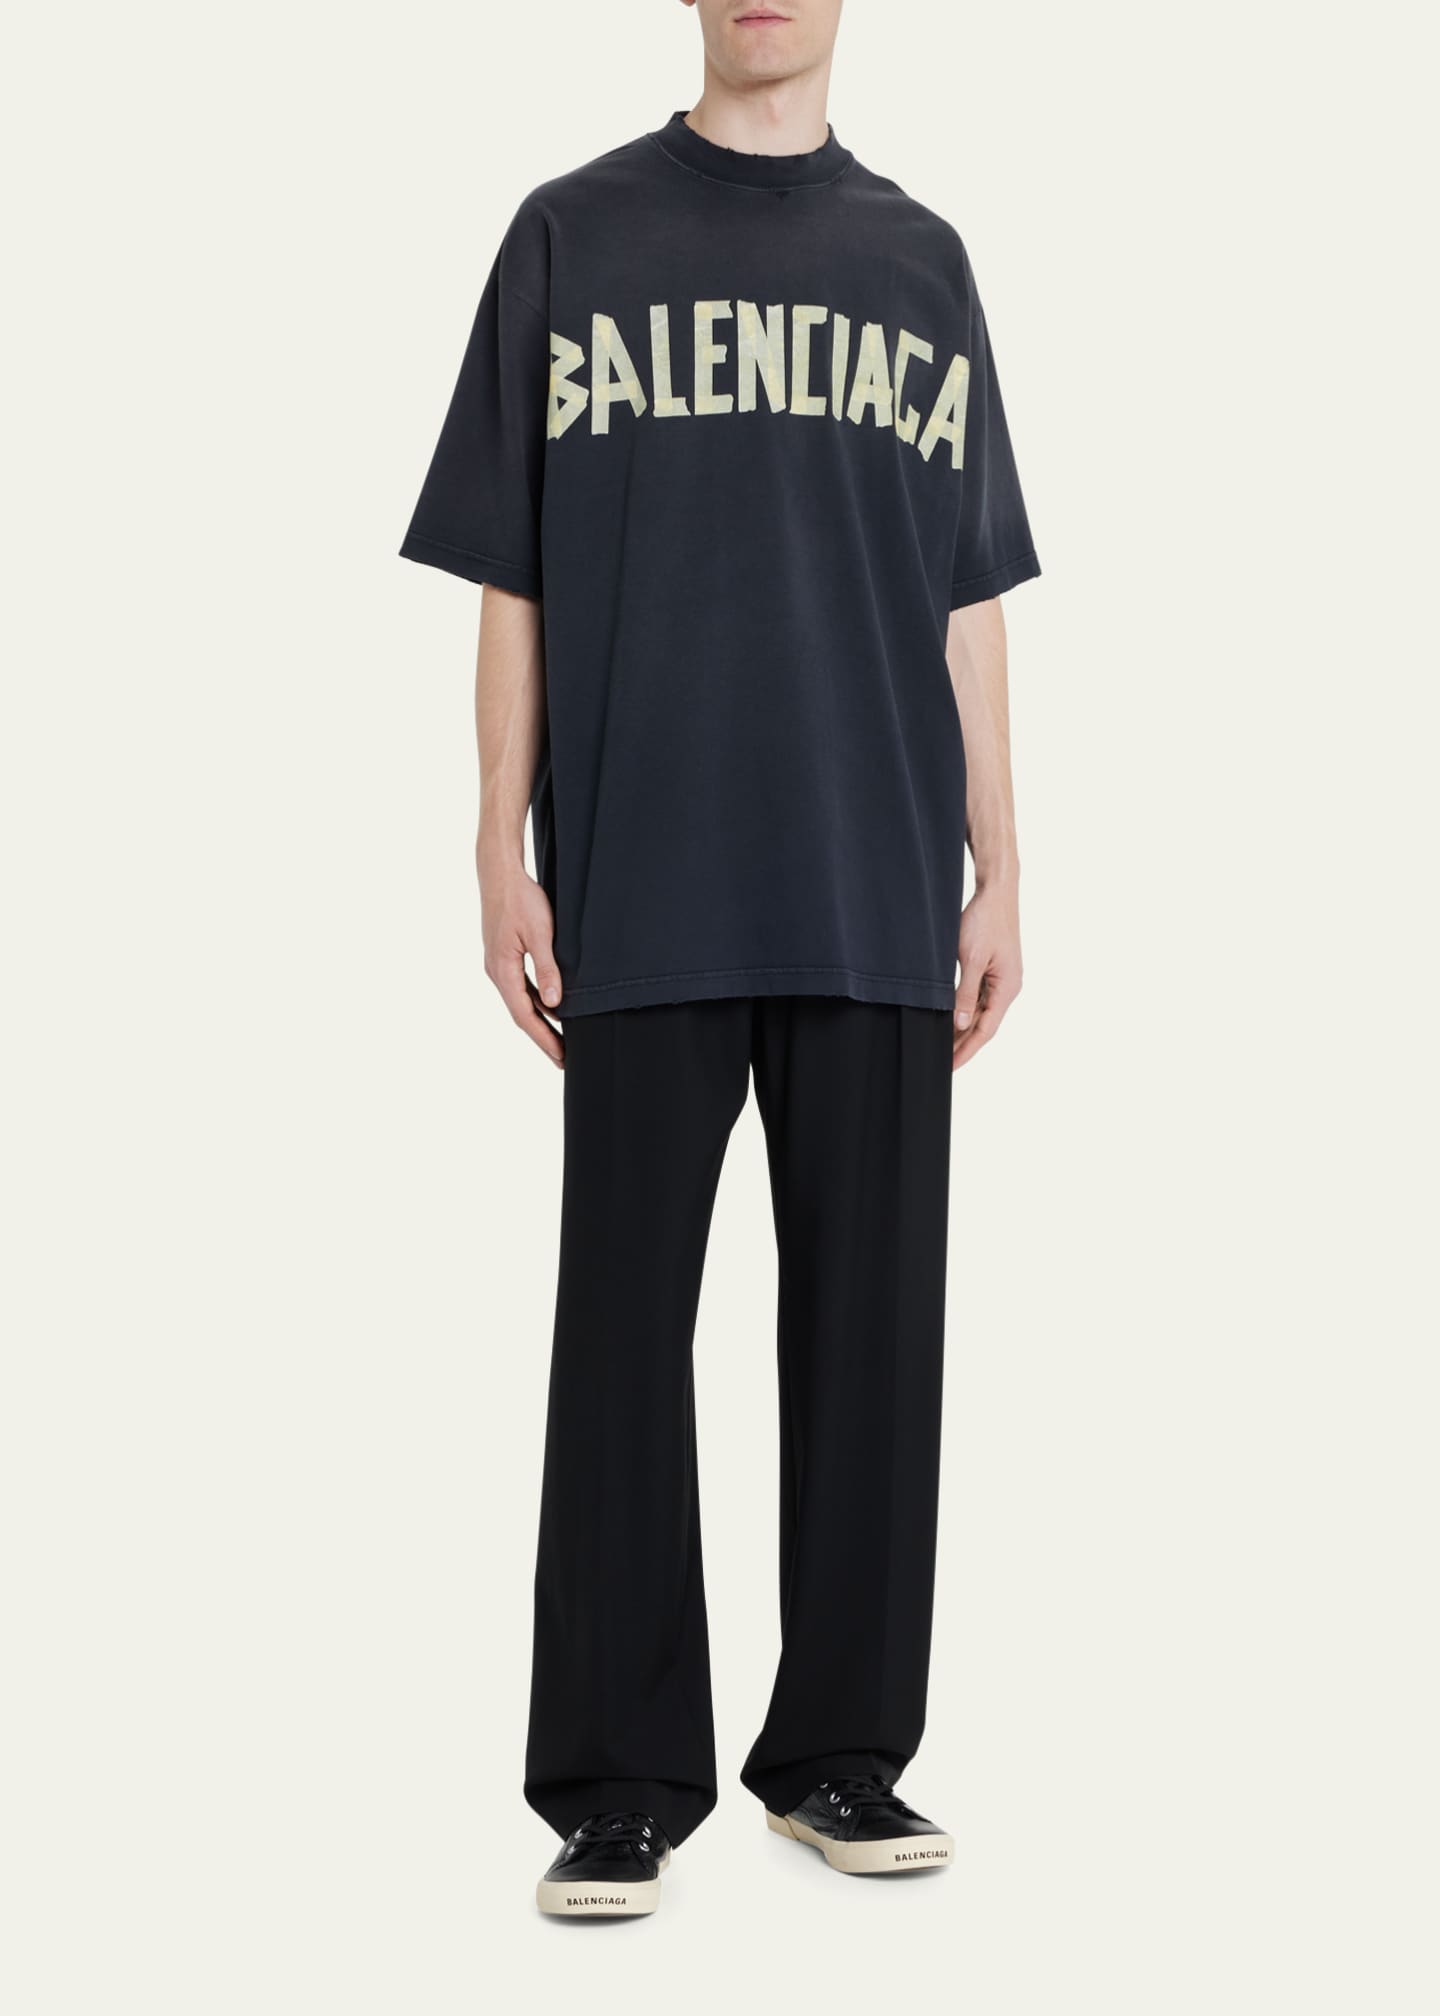 Balenciaga Men's Masking Tape Logo T-Shirt